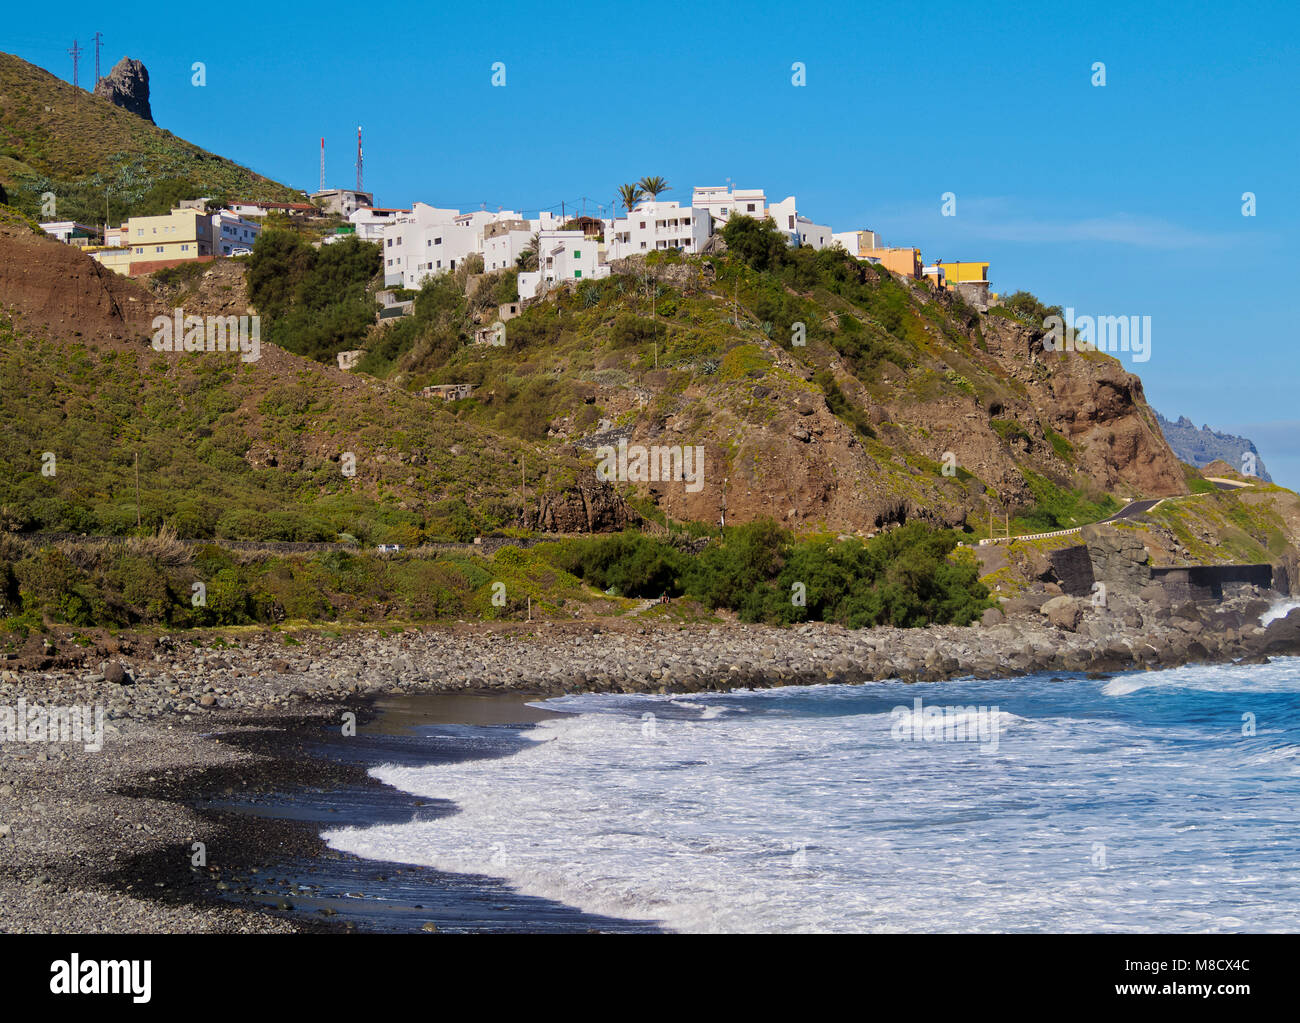 View of the coast towards Almaciga, Anaga Rural Park, Tenerife Island, Canary Islands, Spain Stock Photo